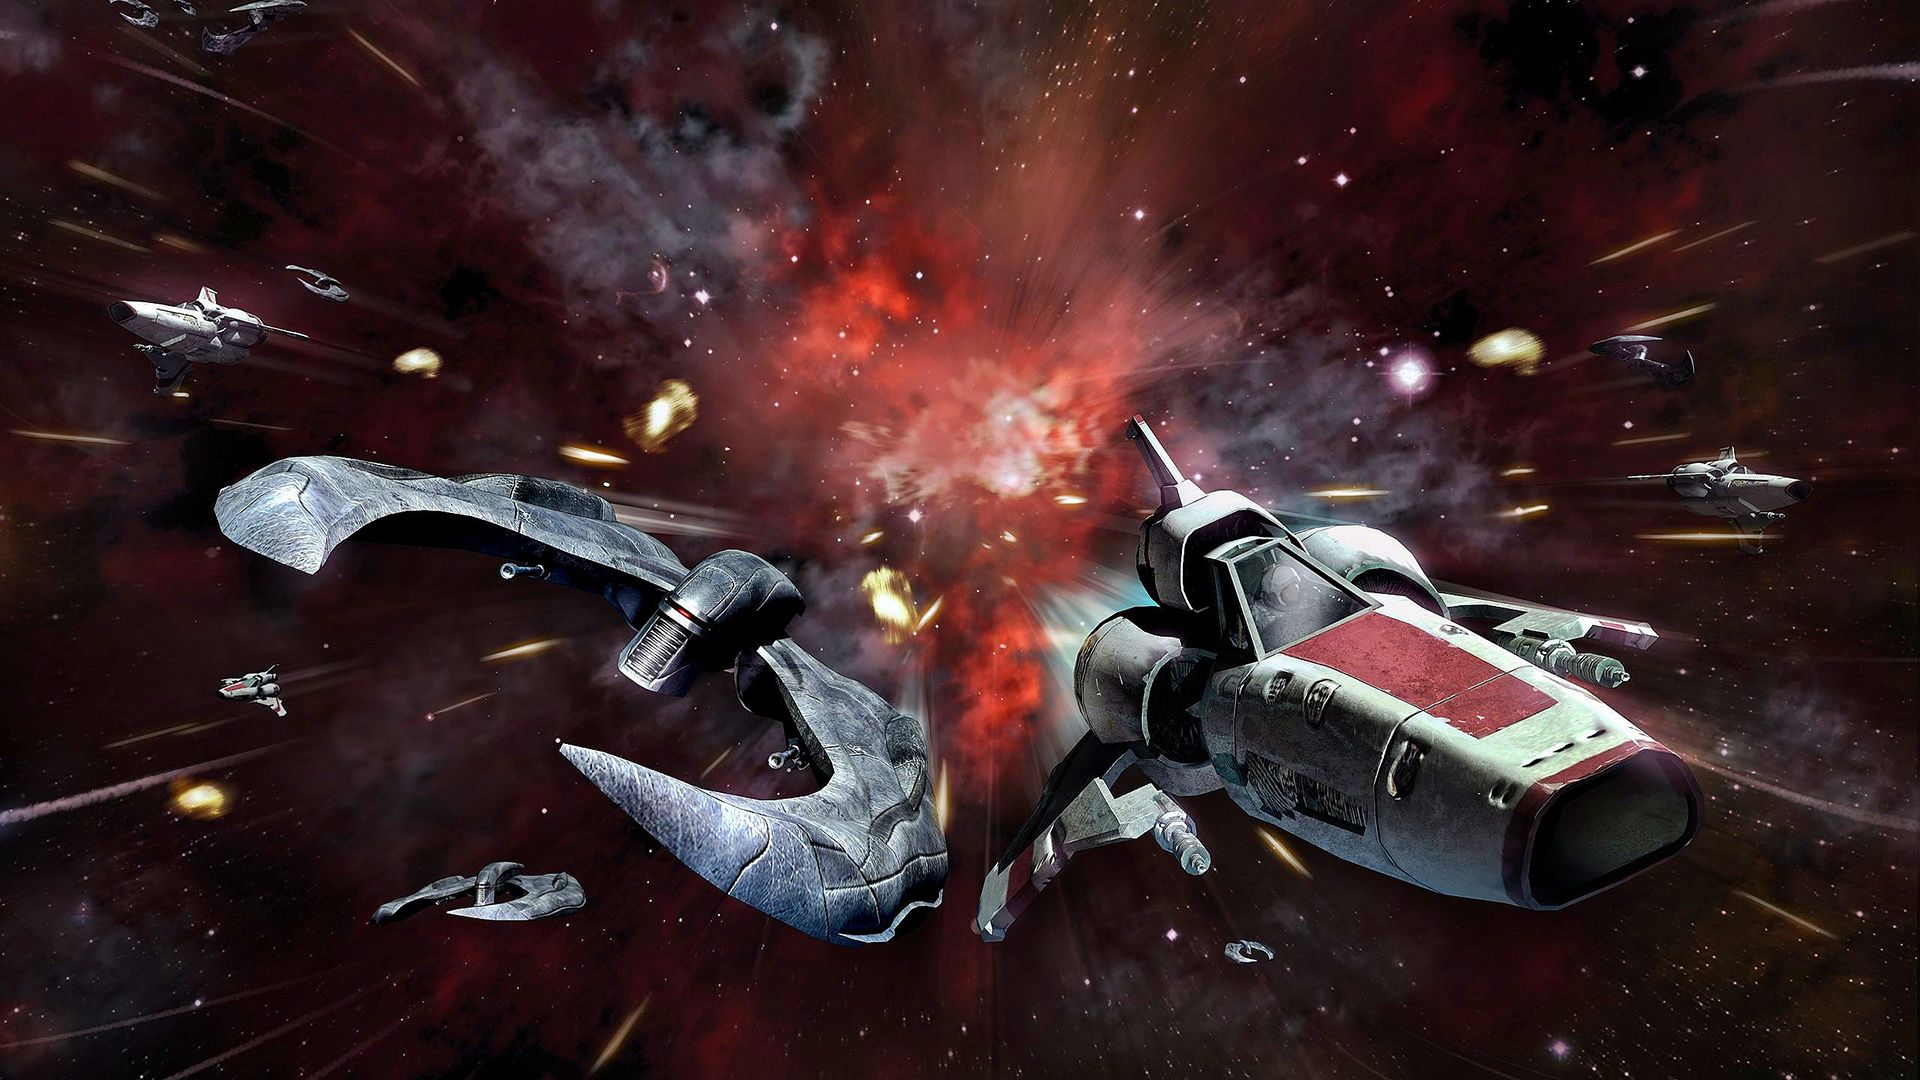 Battlestar Galactica background